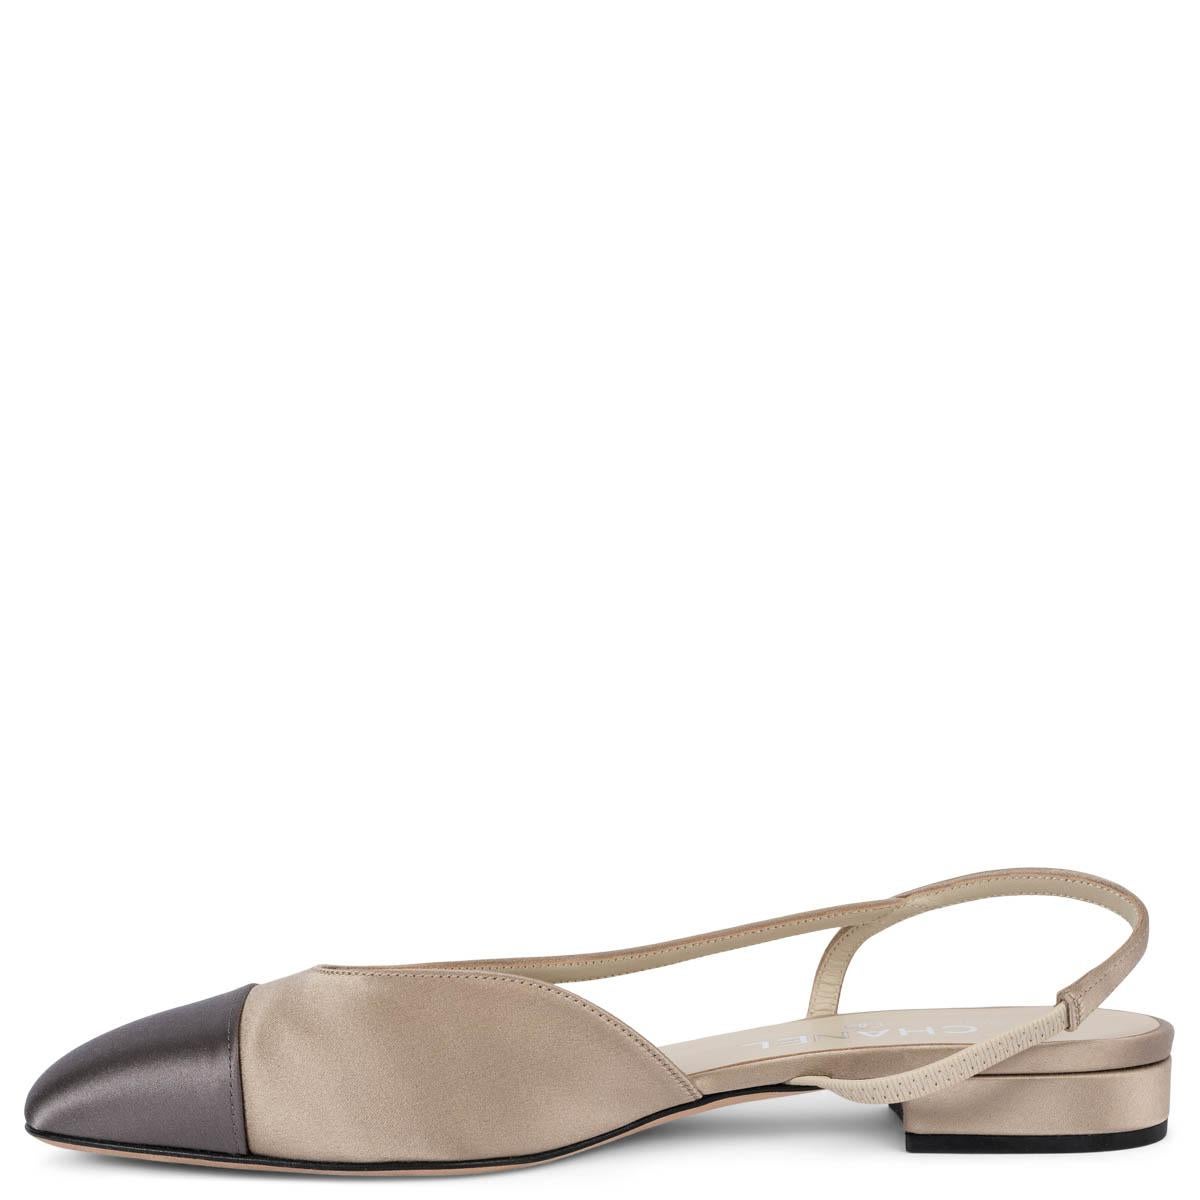 Women's CHANEL beige & grey SATIN SLINGBACK Flats Shoes 39